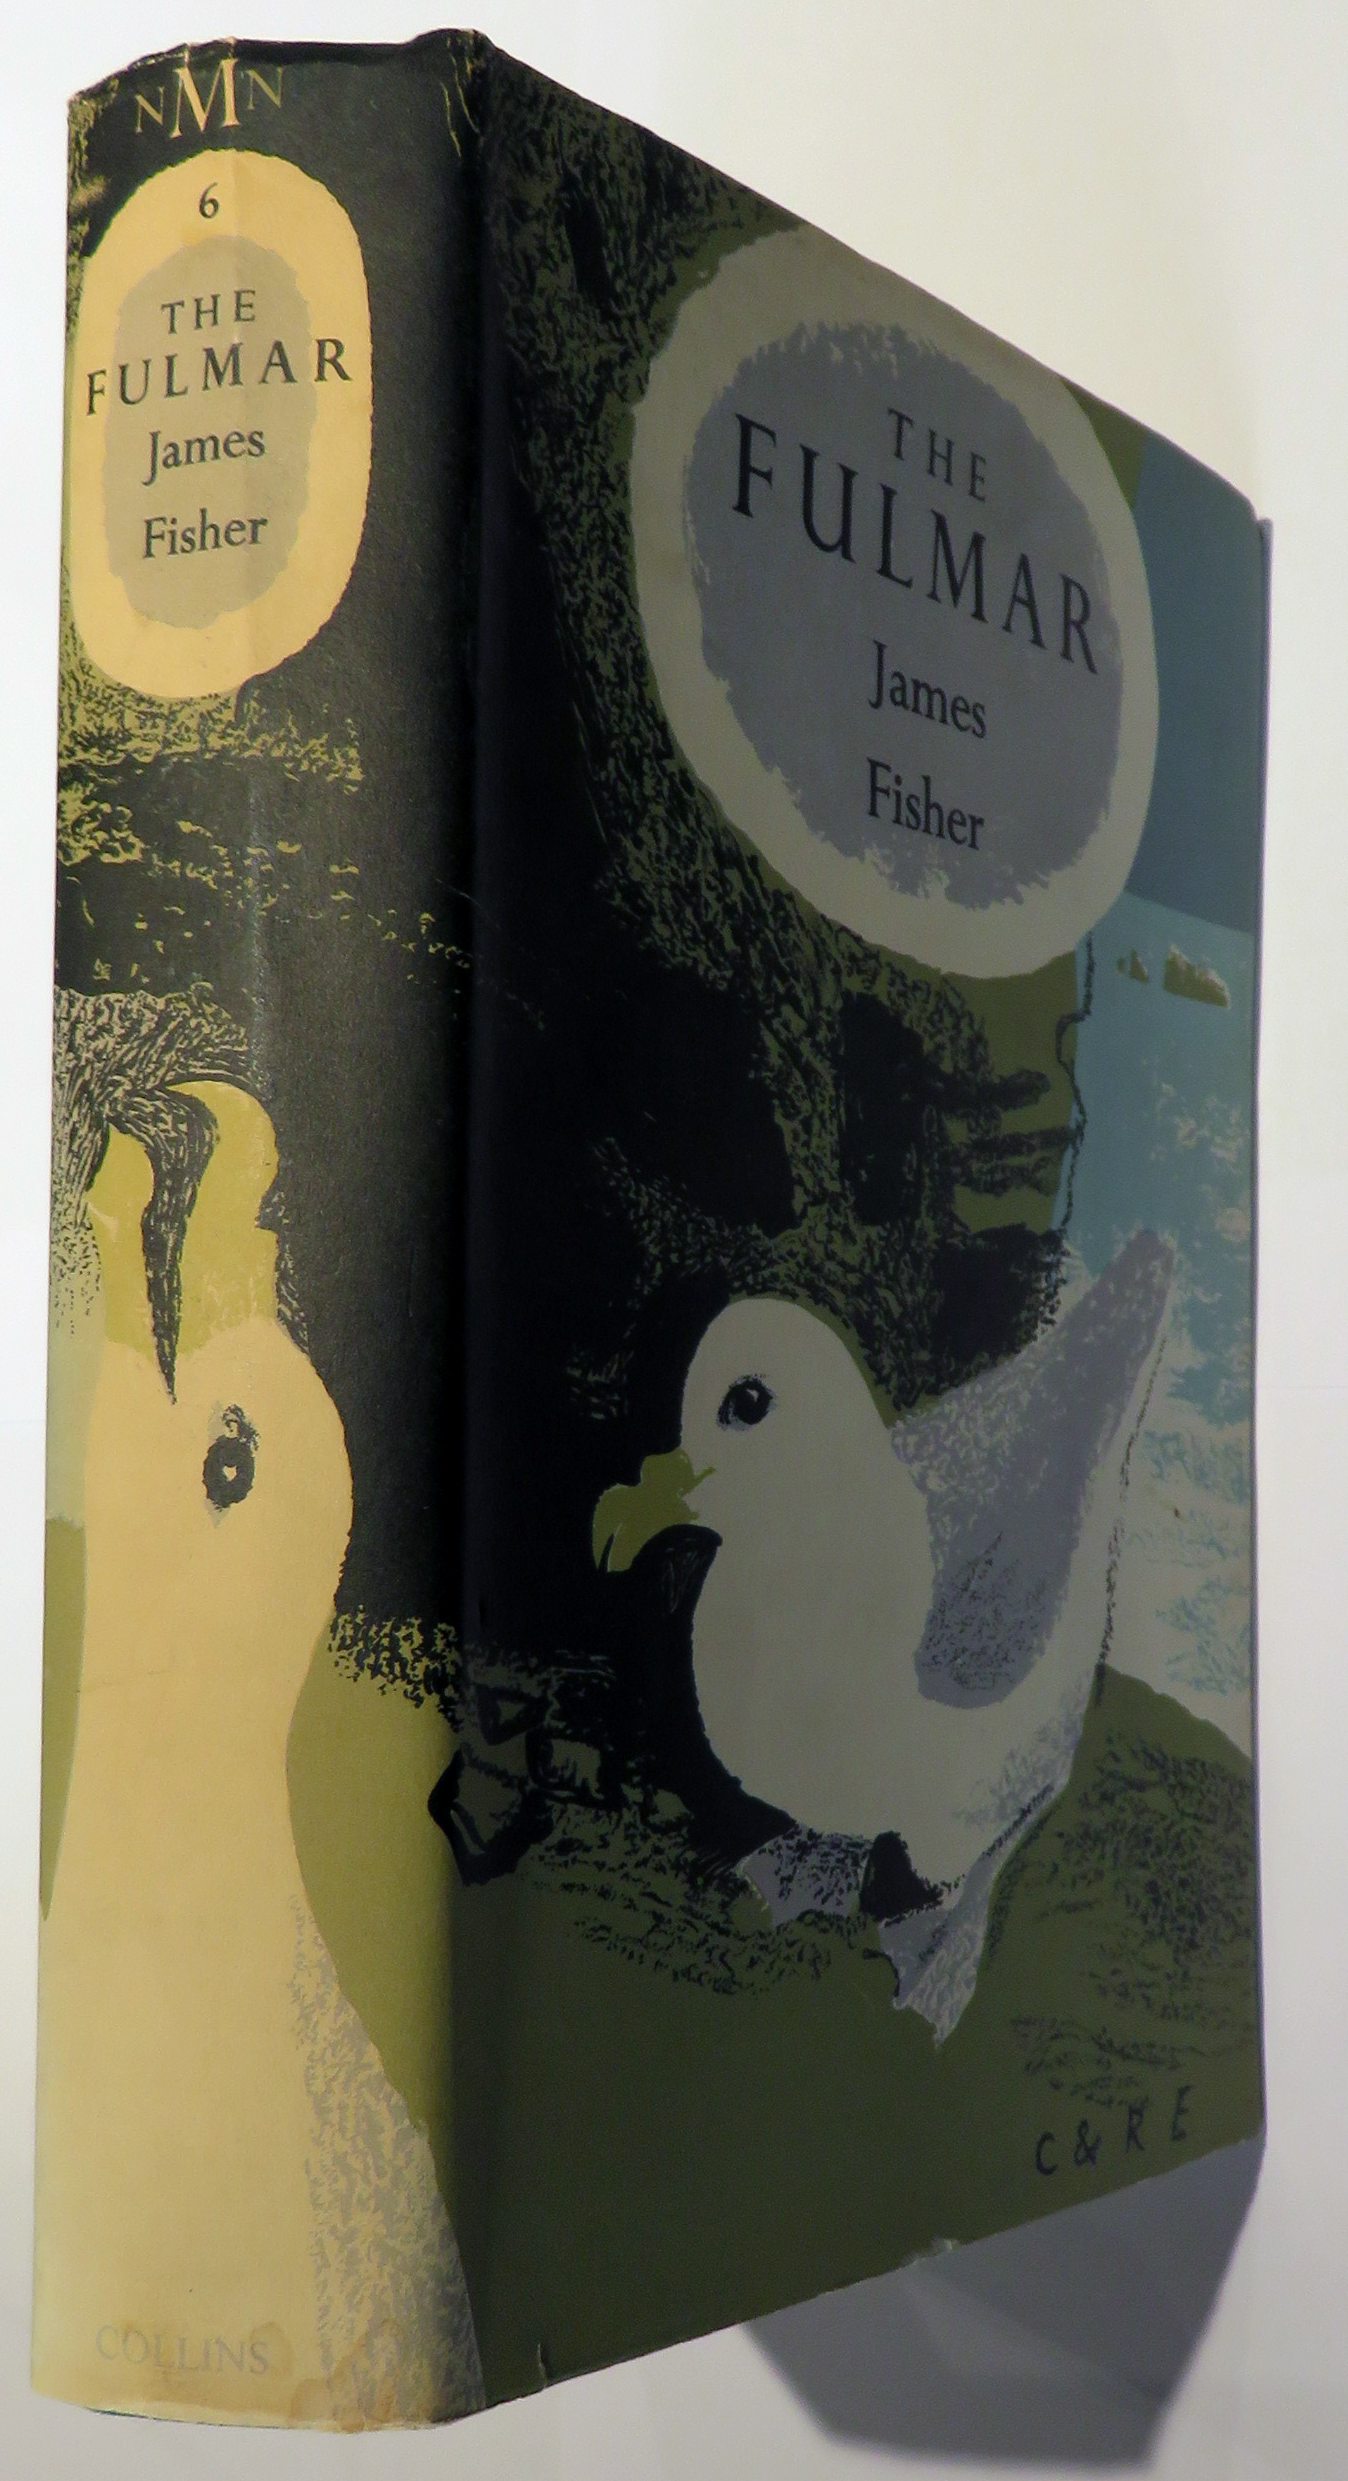 The Fulmar. New Naturalist Monograph Series No. 6